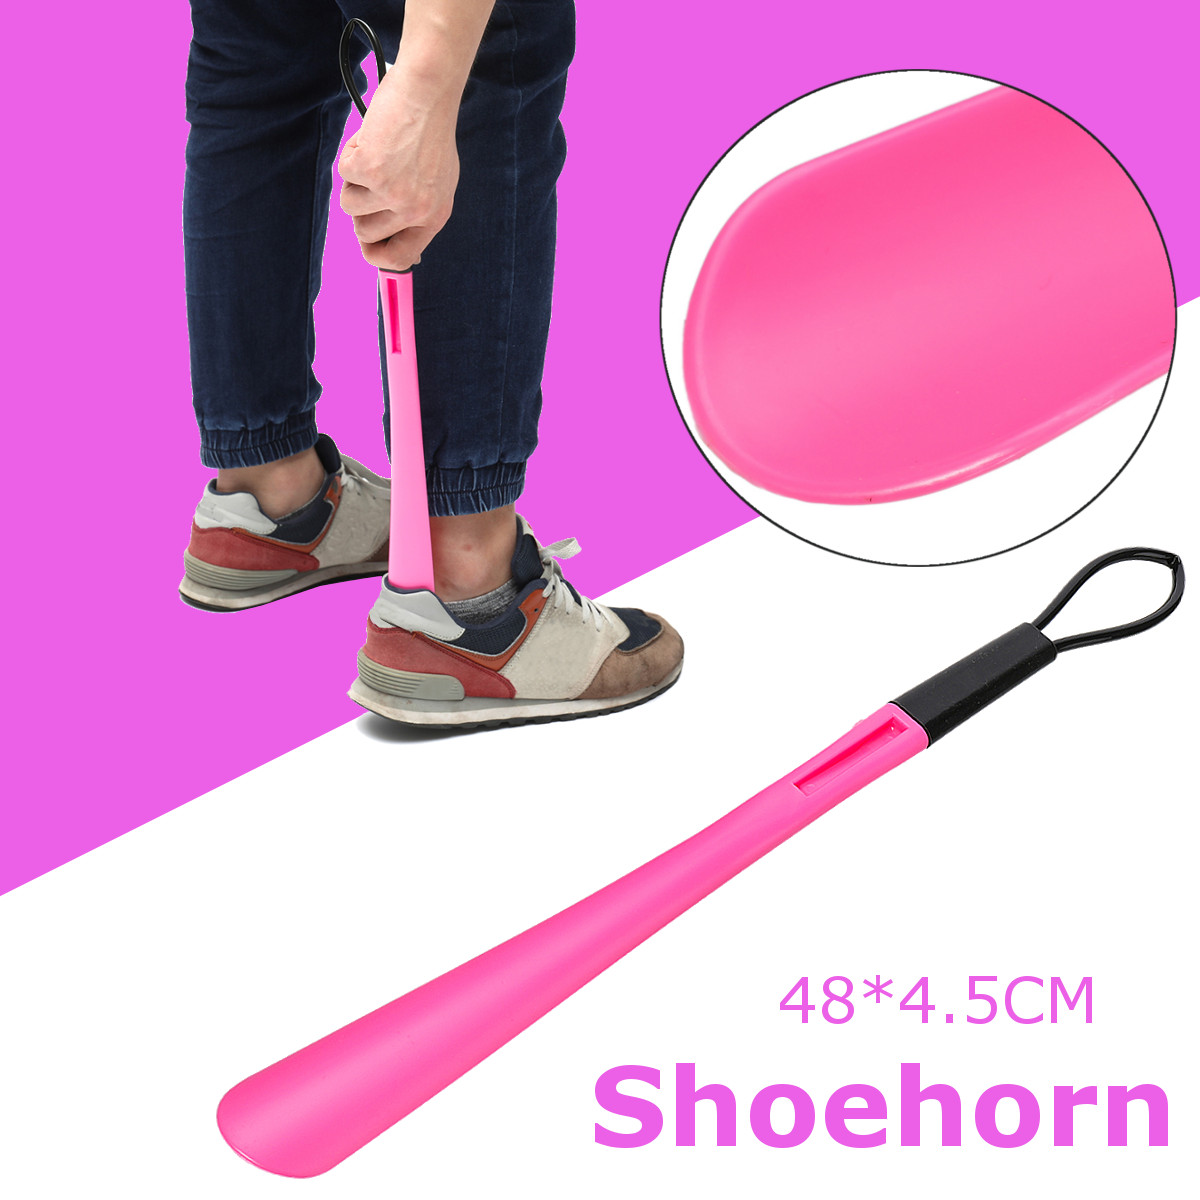 Wooden Shoe Horn Long Handle Shoehorn Flexible Sturdy Slip Shoes Aid  BSC